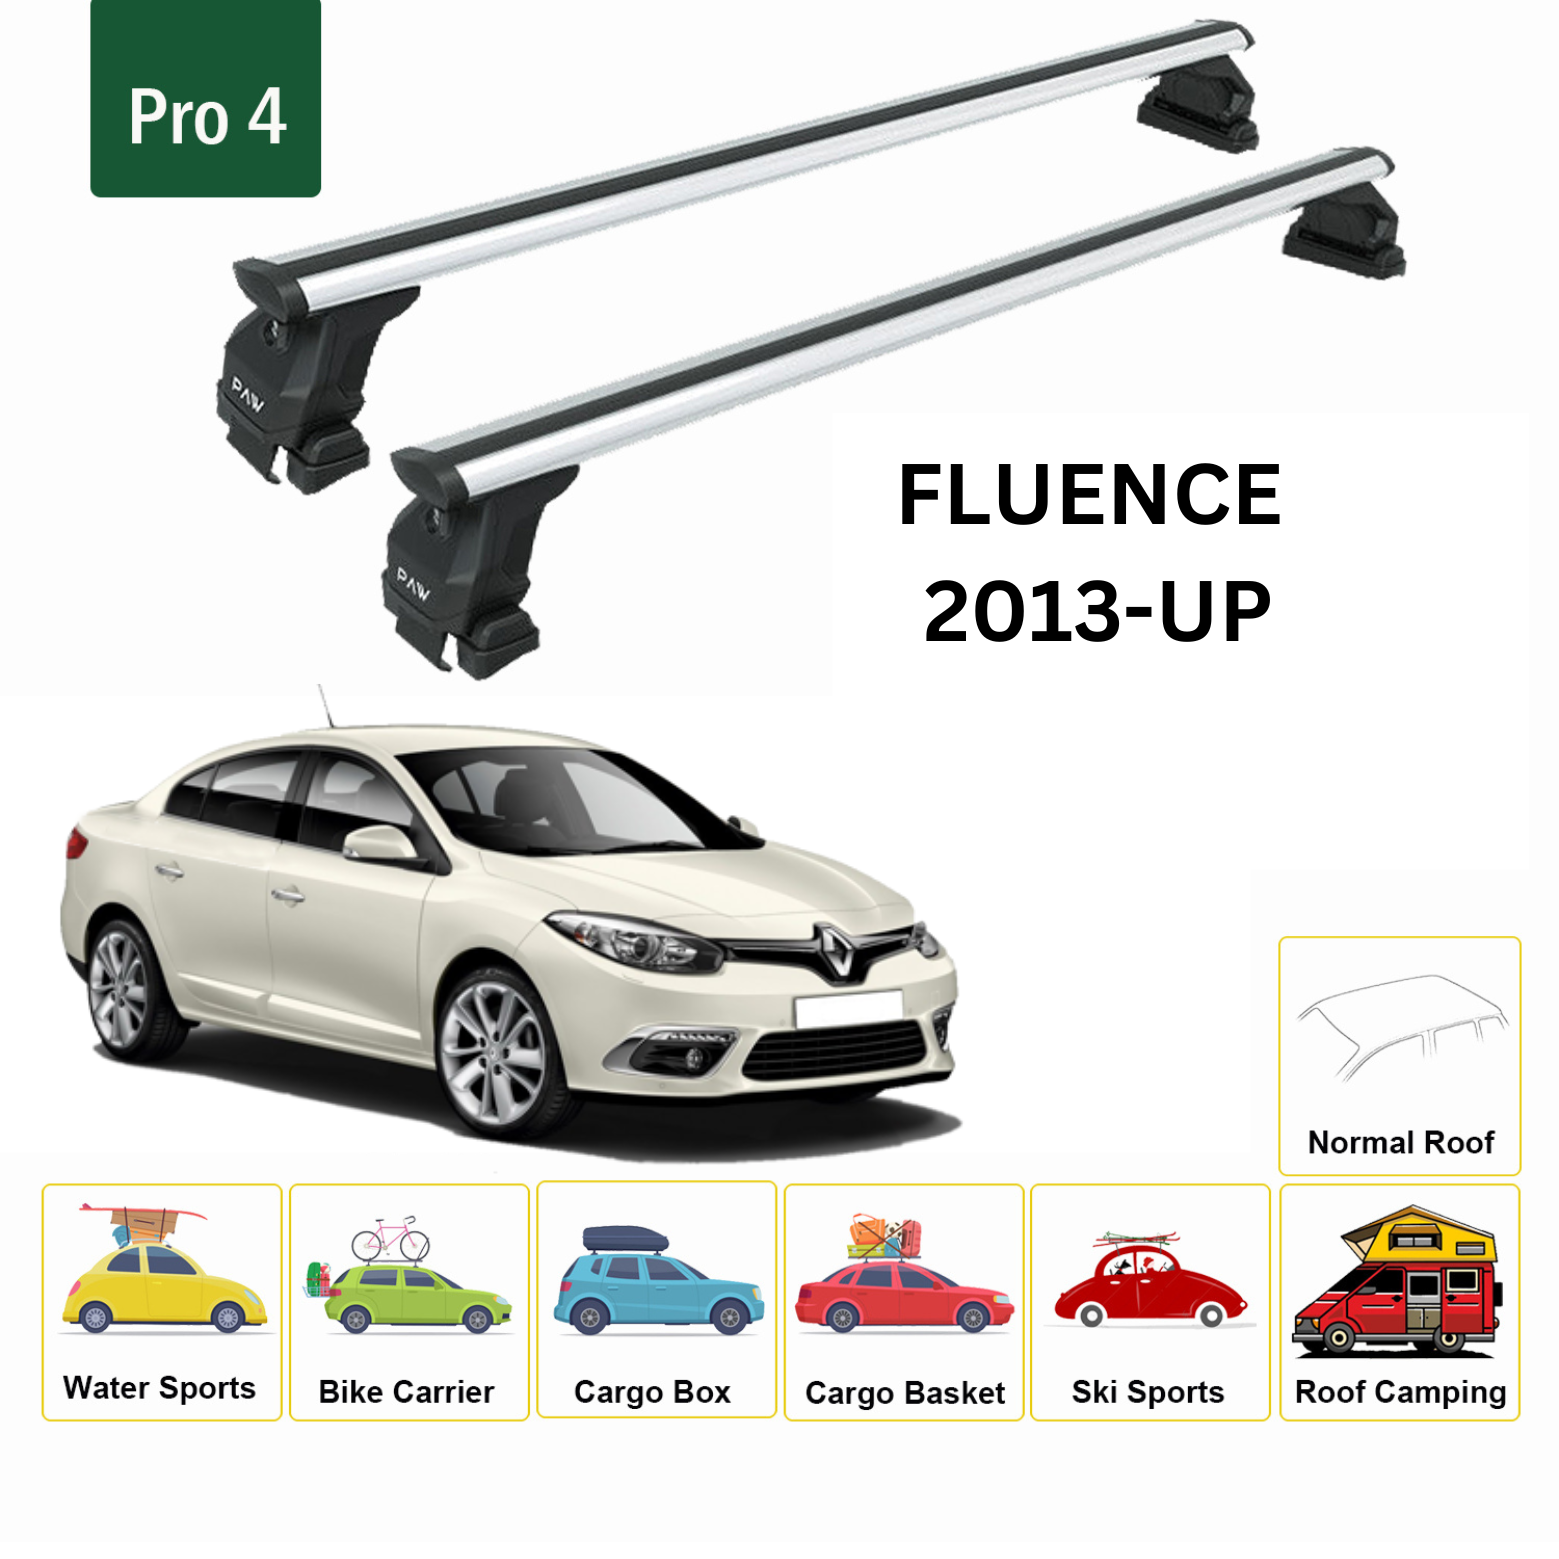 For Renault Fluence 2013-Up Roof Rack System, Aluminium Cross Bar, Metal Bracket, Normal Roof, Silver - 0